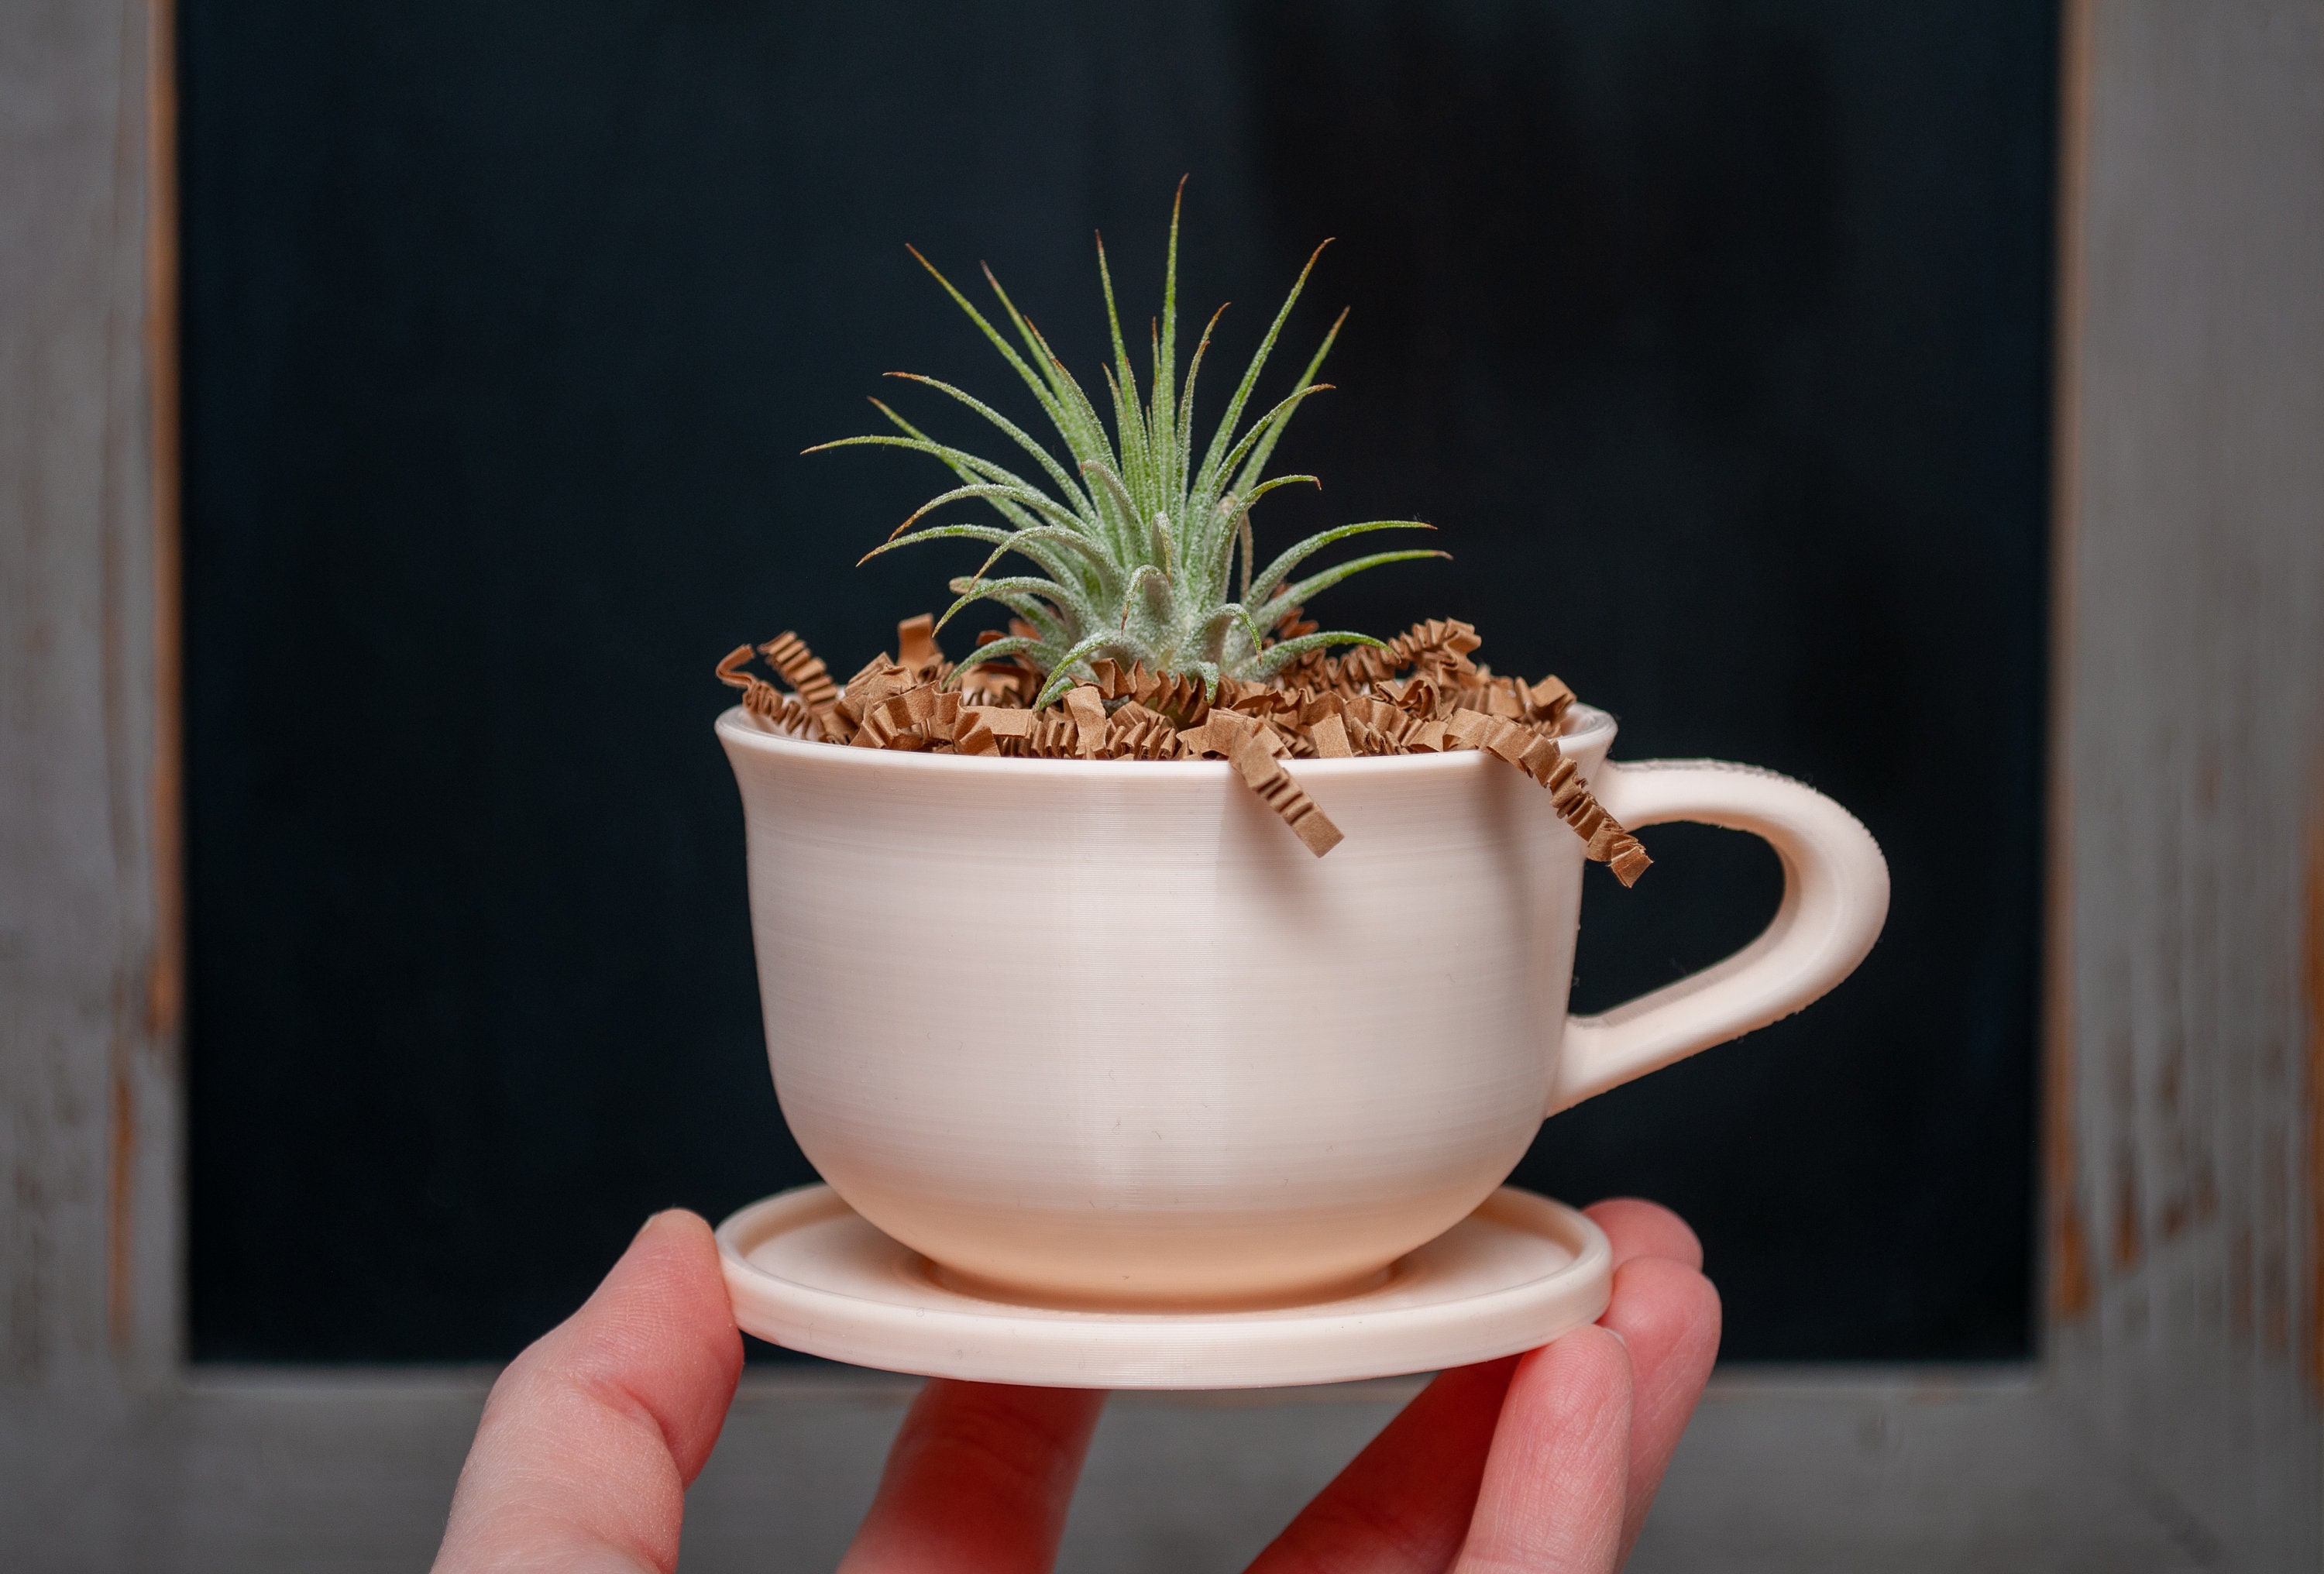 Pot Head Ceramic Coffee Mug Funny Gifts Espresso Cup - Temu